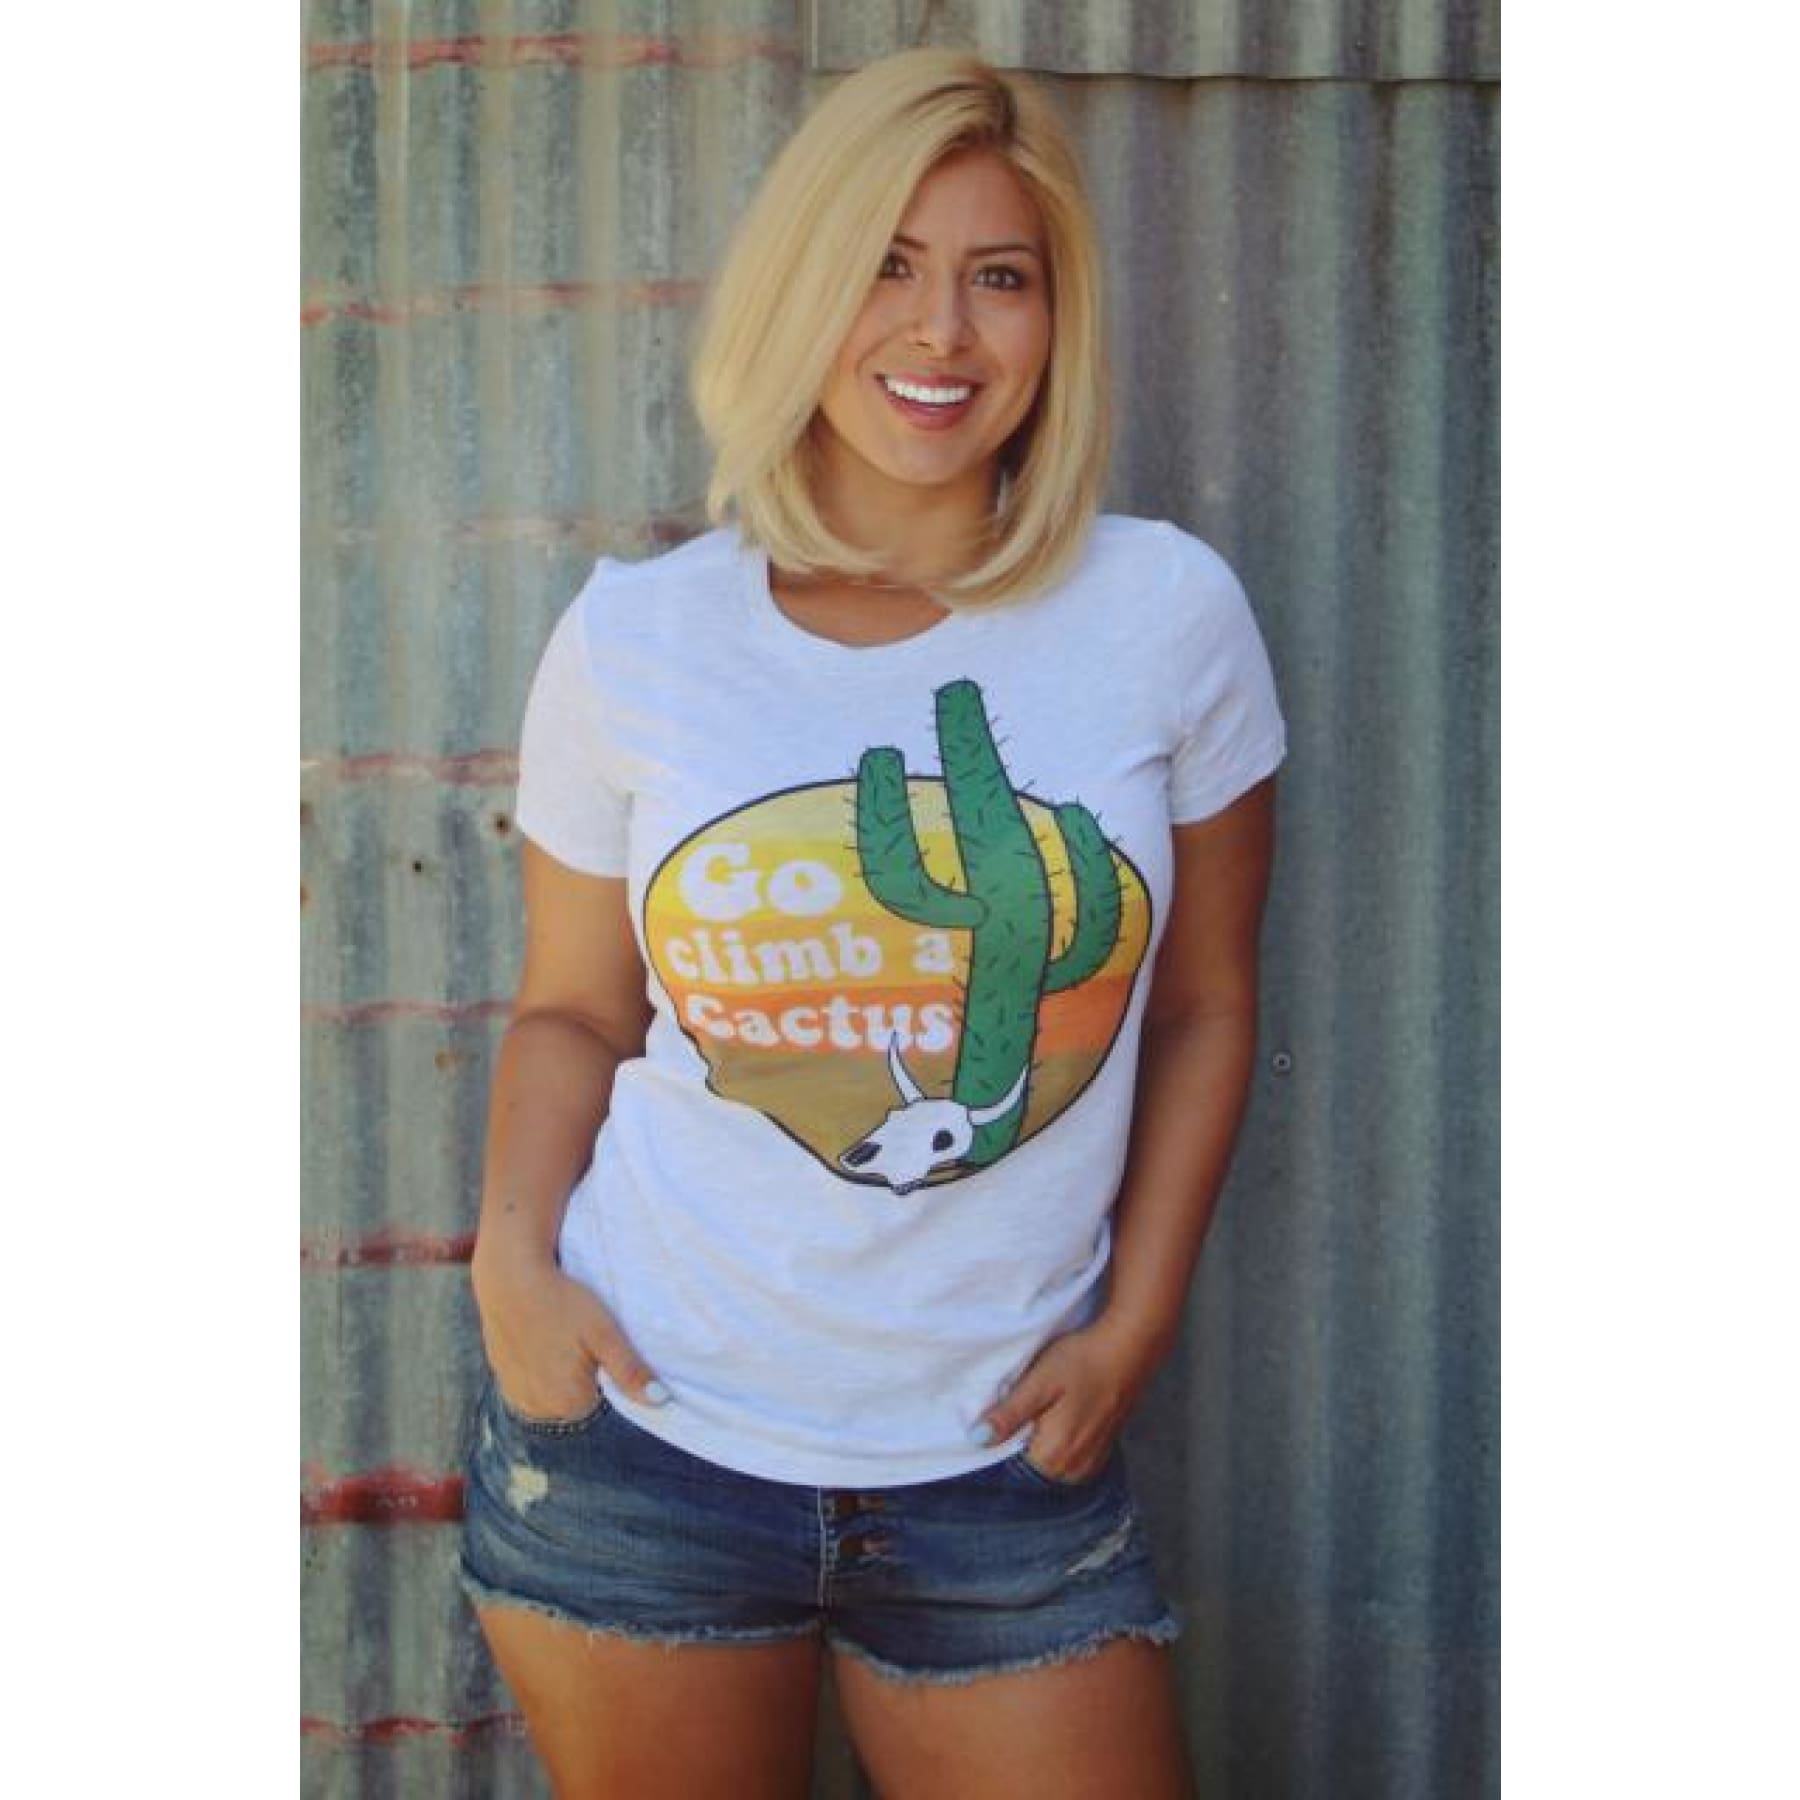 Go Climb a Cactus Tee Shirt,Graphic Tee - Dirt Road Divas Boutique